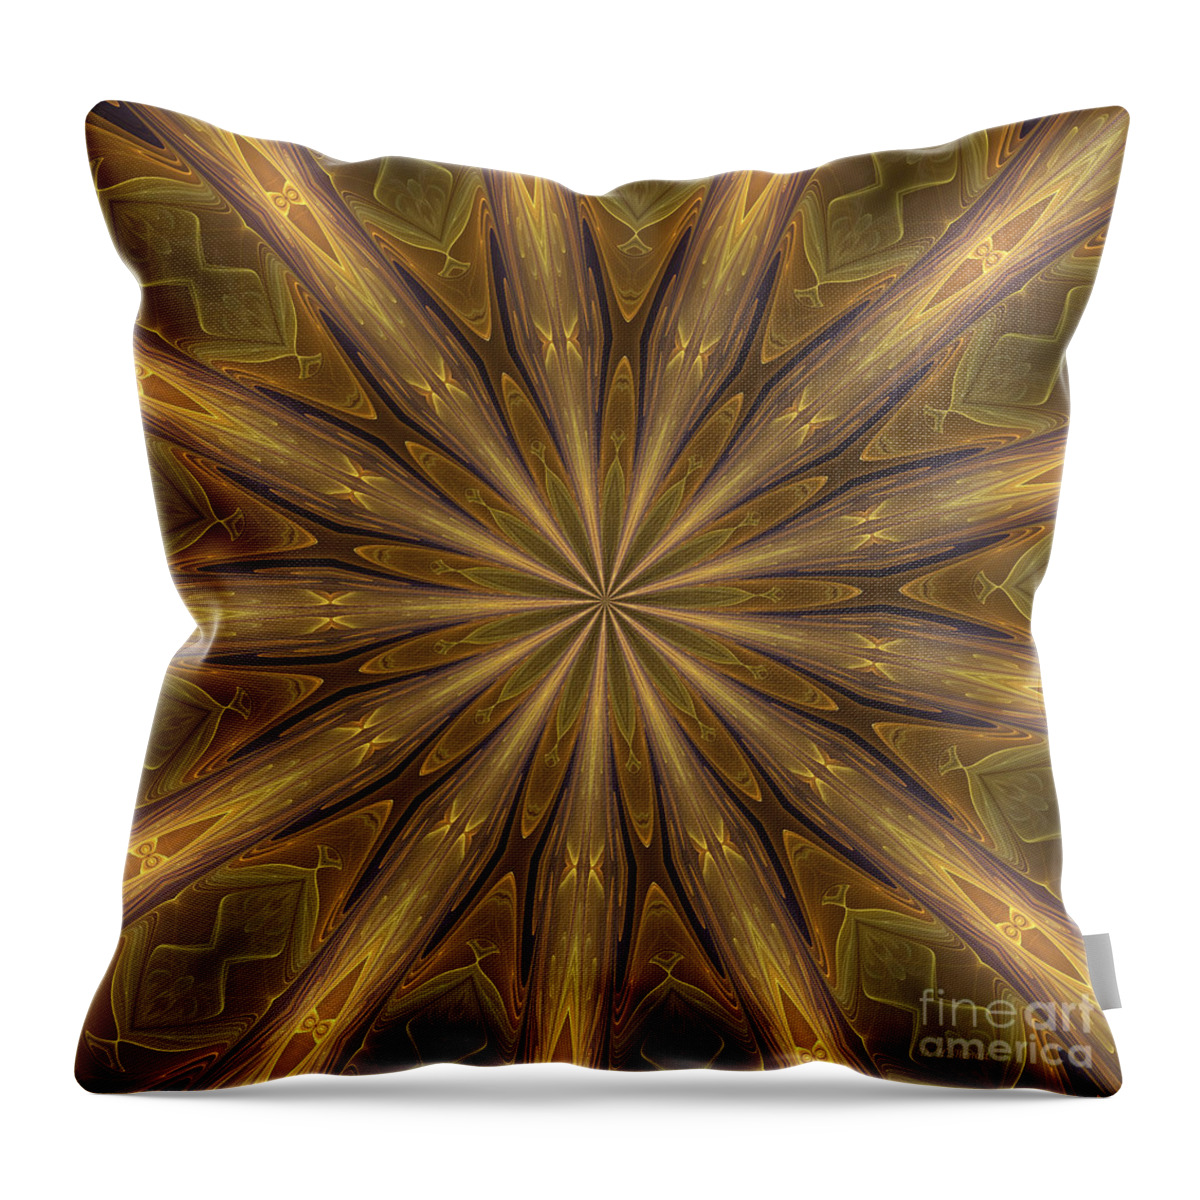 Kaleidoscope Throw Pillow featuring the digital art Kaleidoscope With Gold by Deborah Benoit